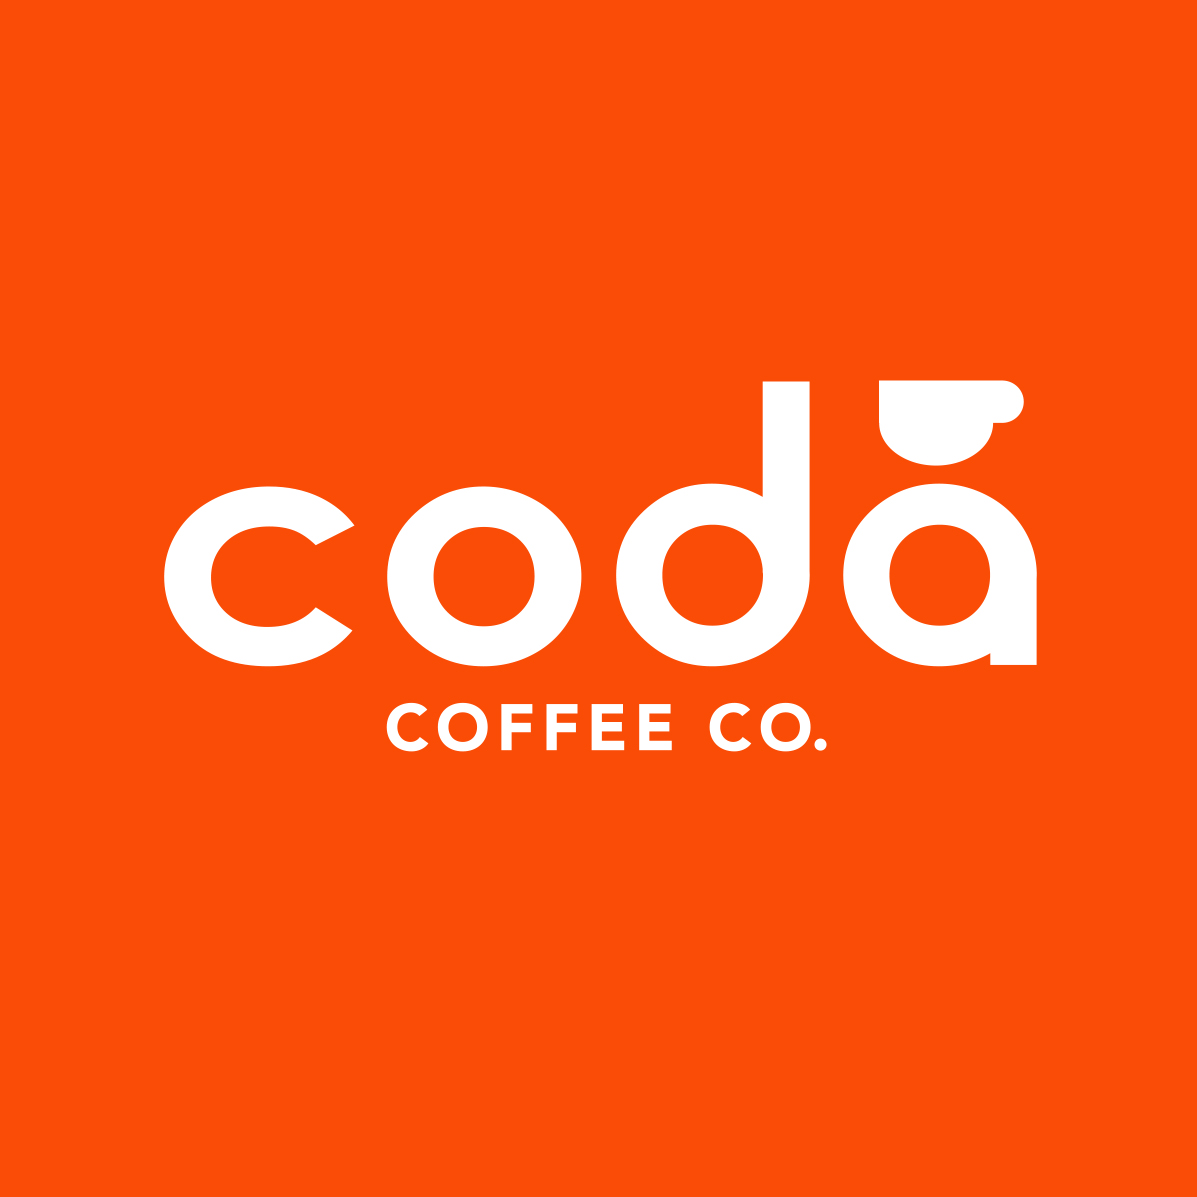 Coda Coffee